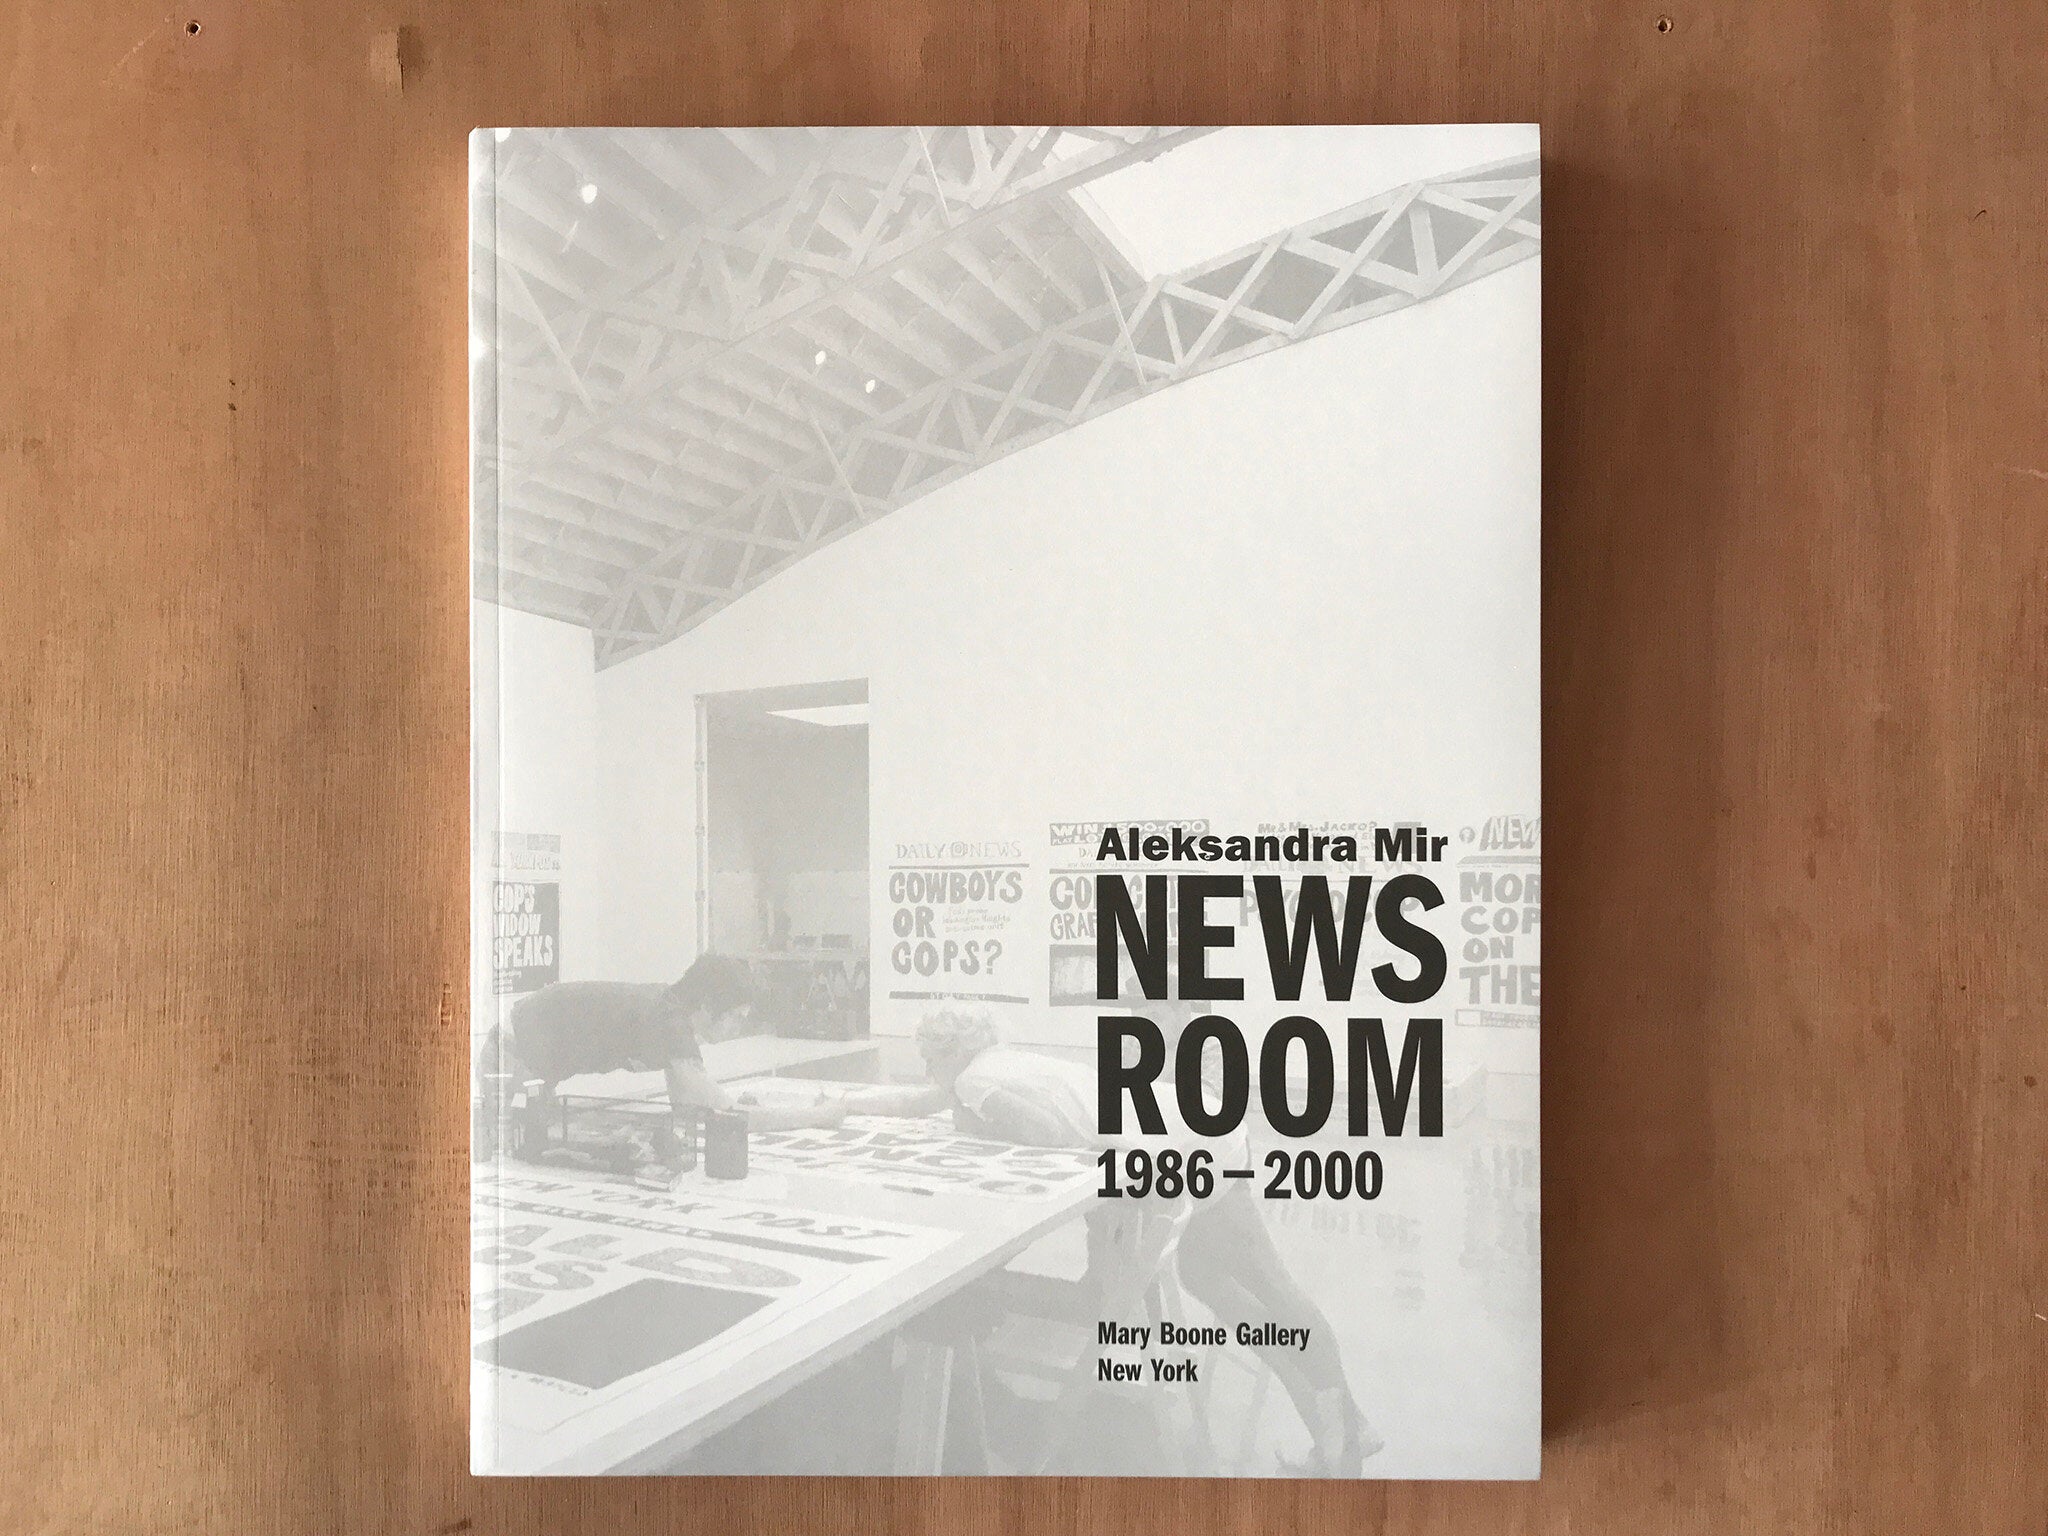 NEWSROOM 1986-2000 by Aleksandra Mir